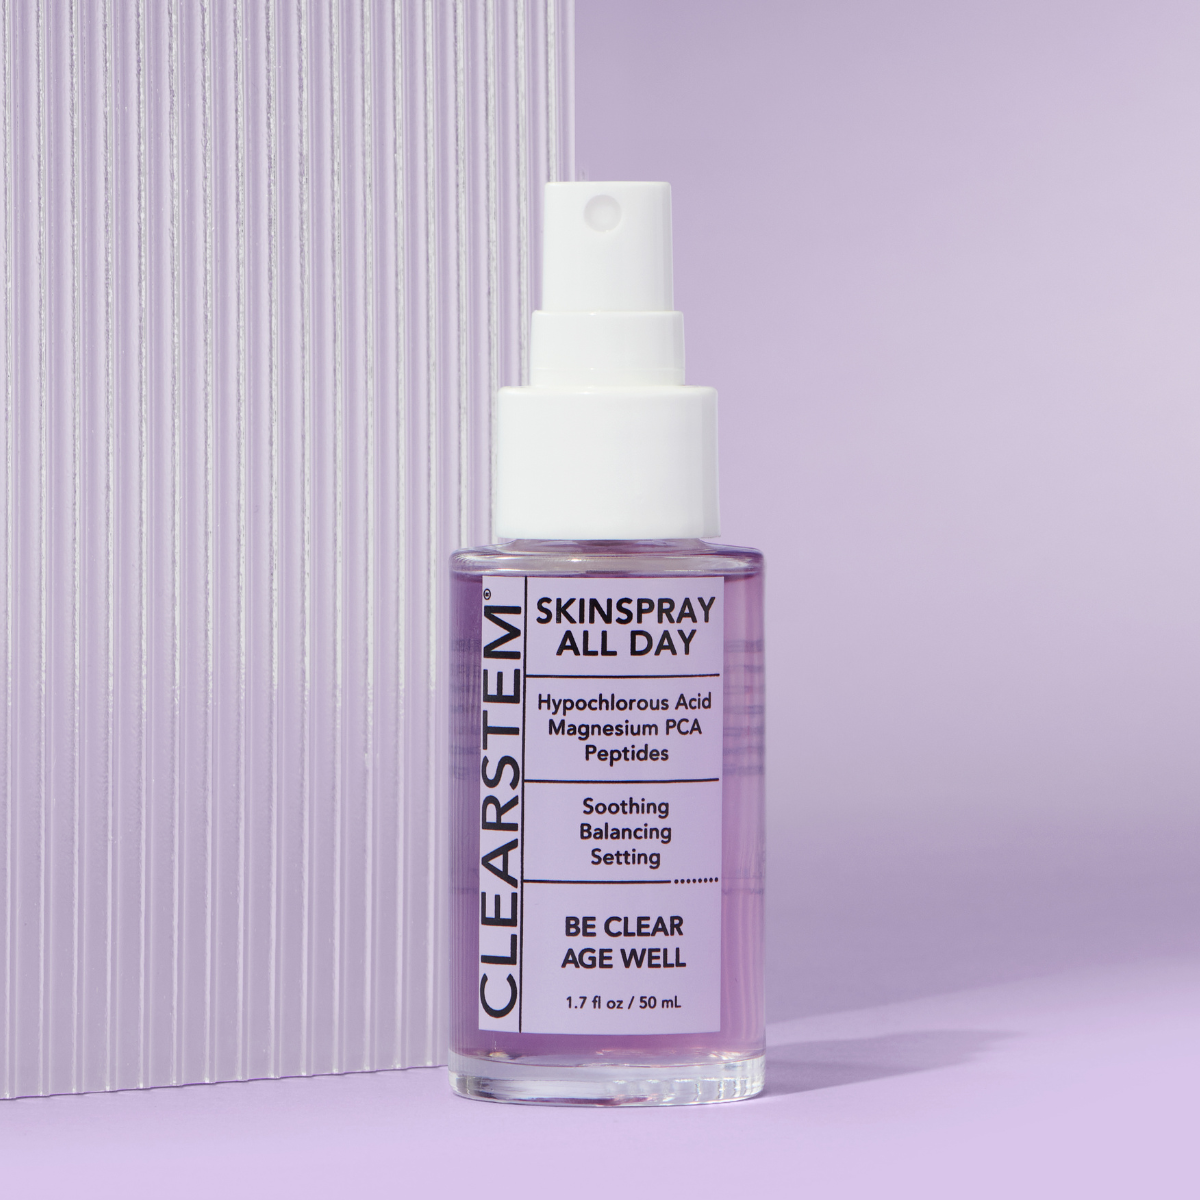 CLEARSTEM SKINSPRAY ALL DAY, a Hypochlorous Acid spray for sensitive skin